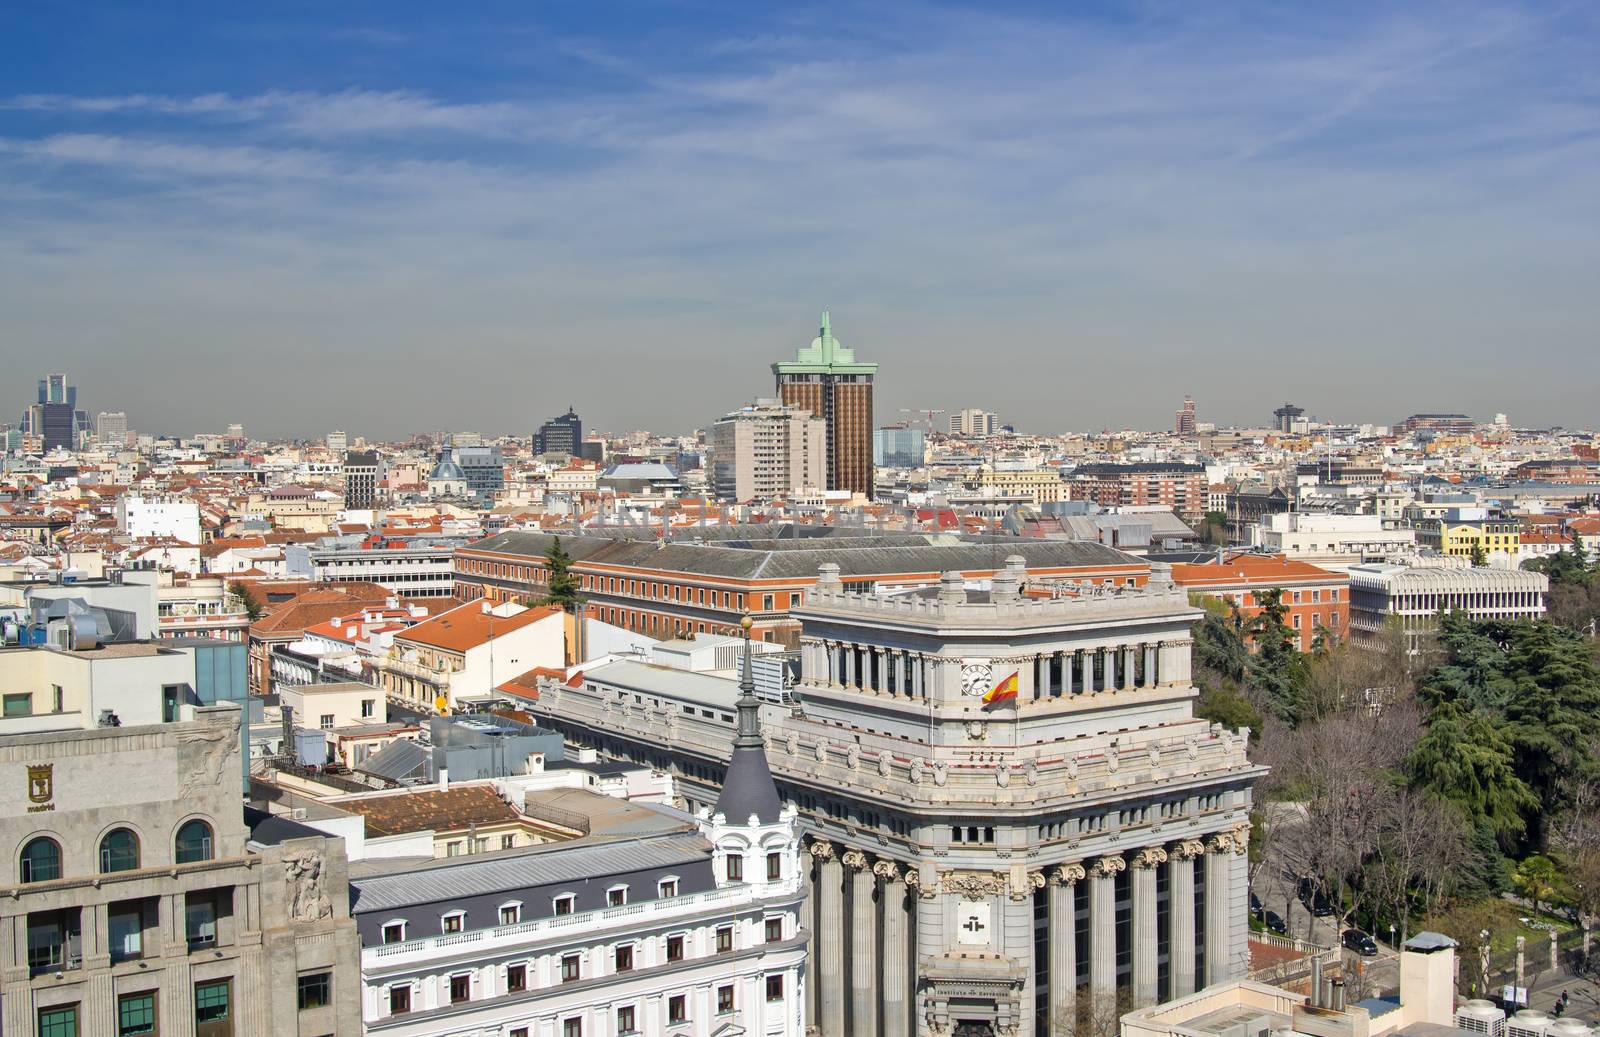 Aerial view of Madrid, Spain by eans